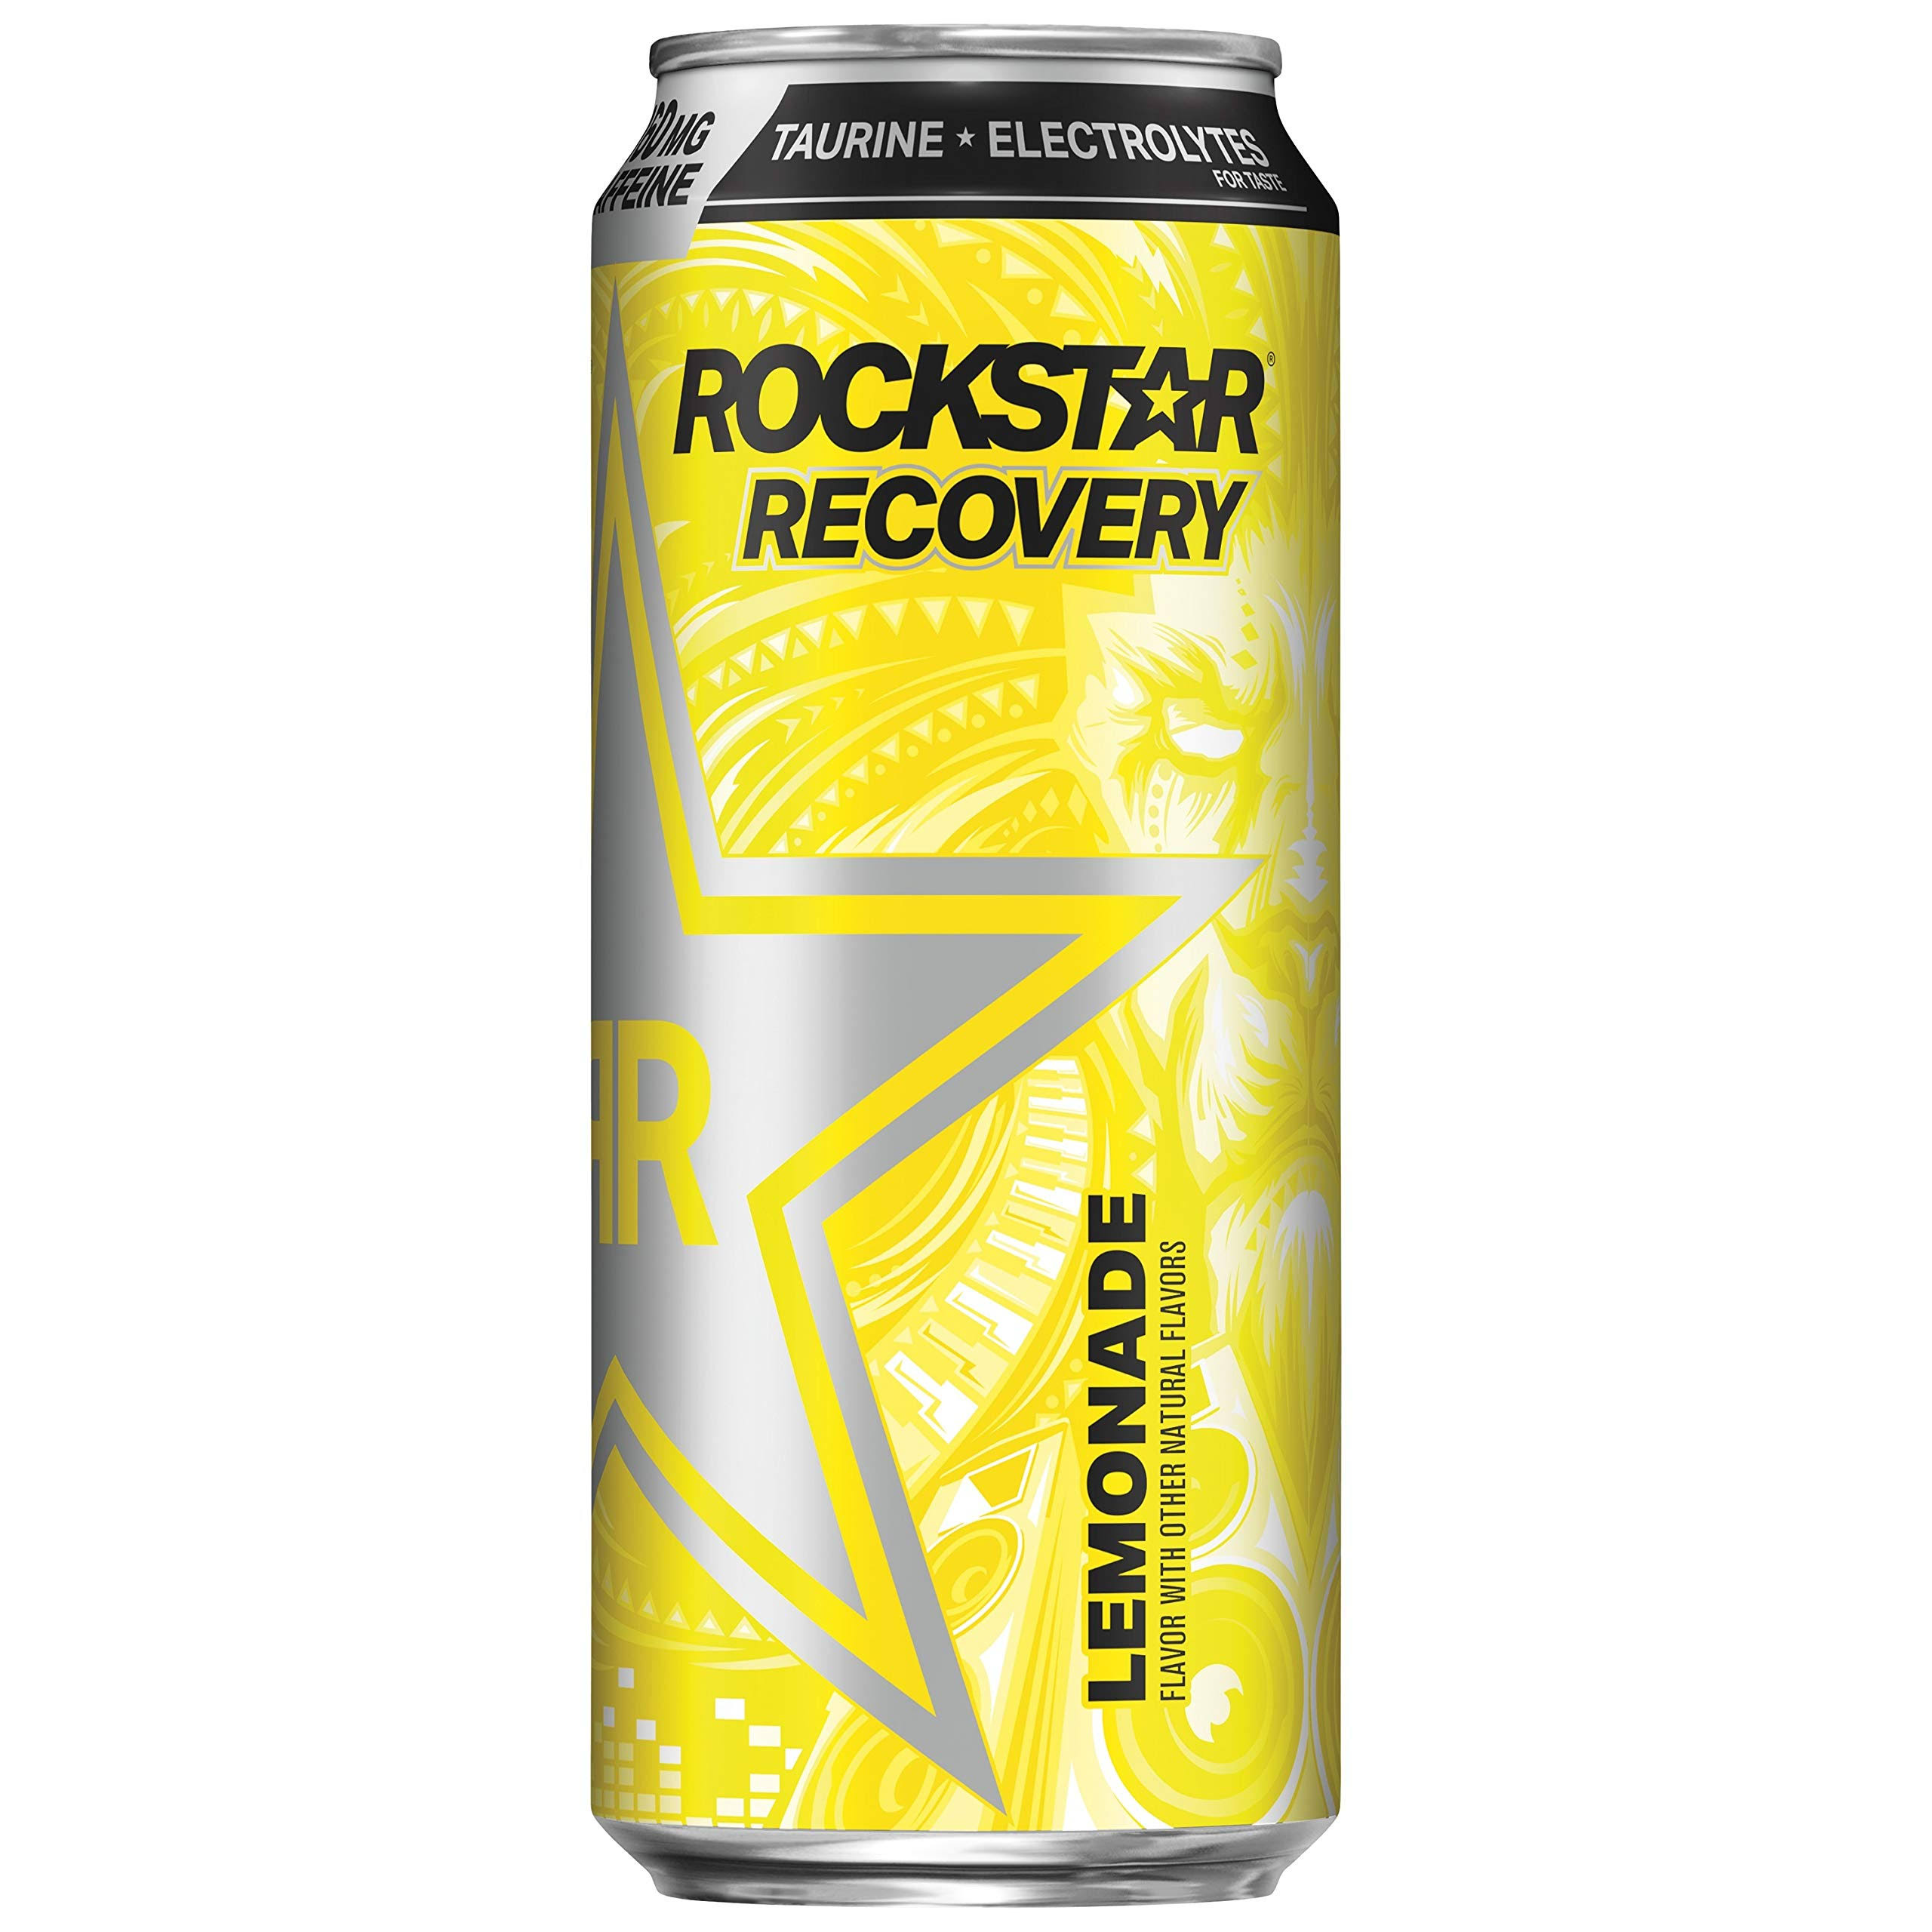 Rockstar Energy Drink, Lemonade, Recovery - 16 fl oz